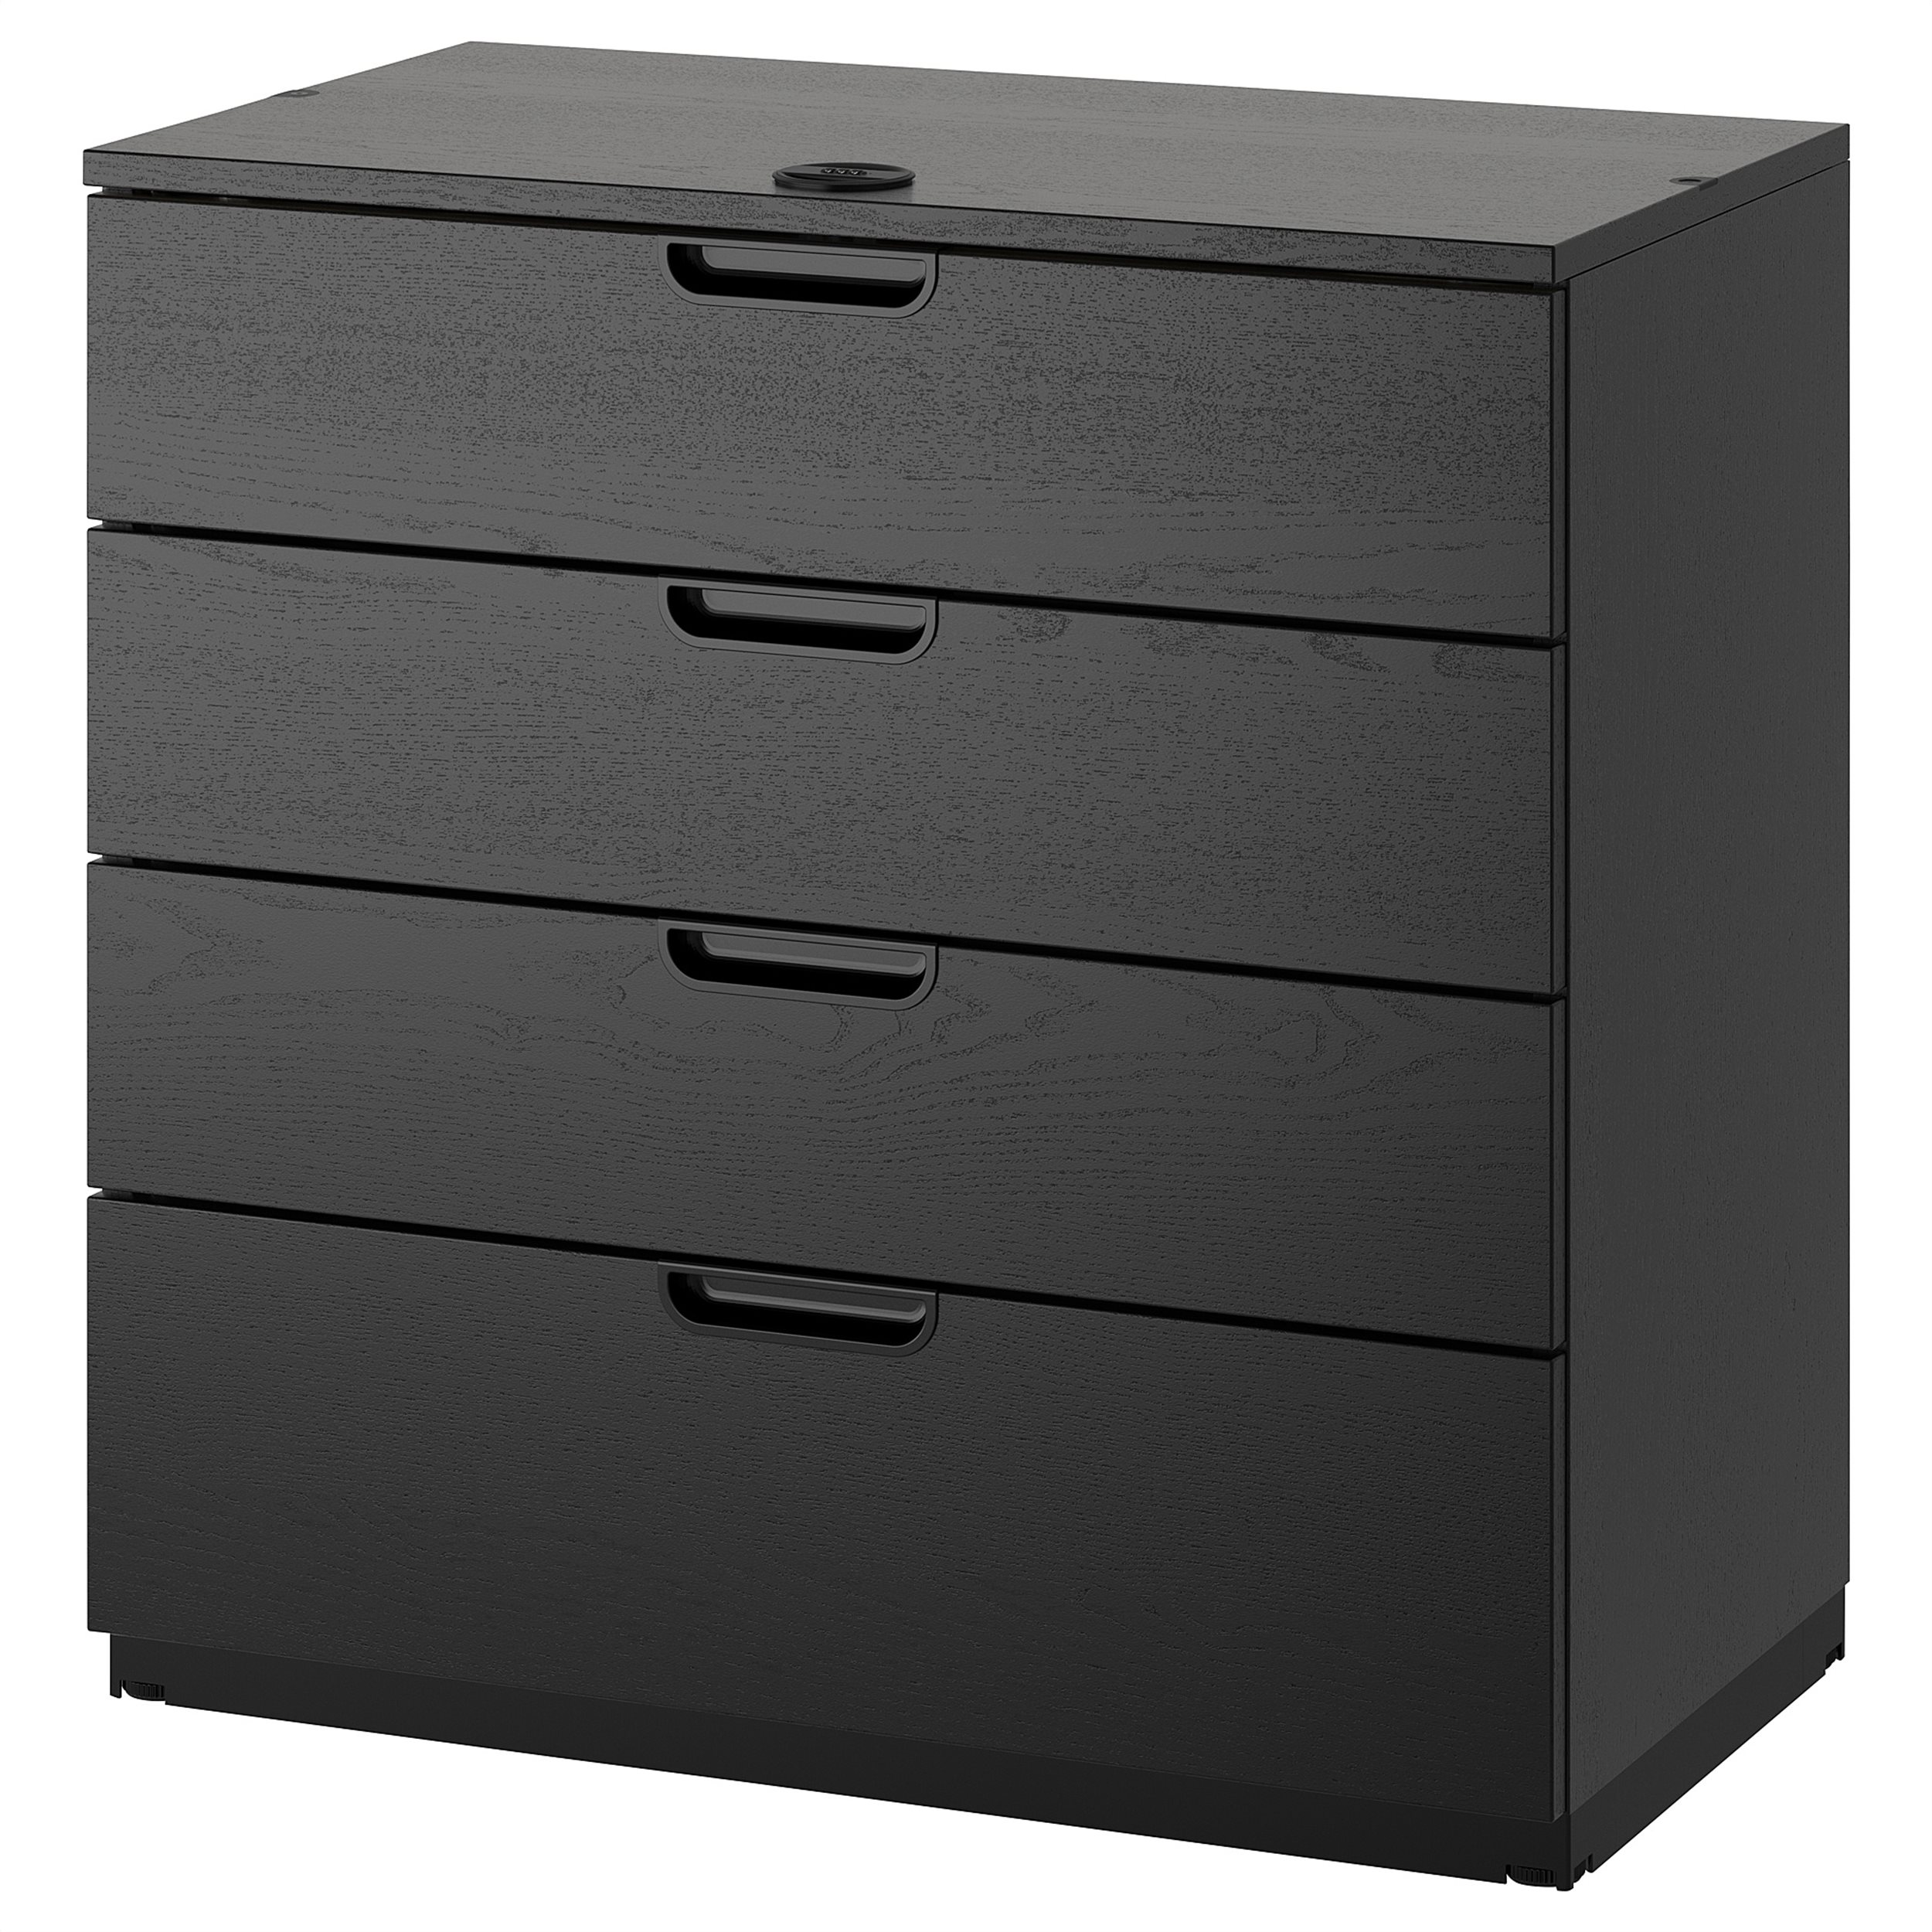 GALANT drawer unit, Black IKEA Cyprus